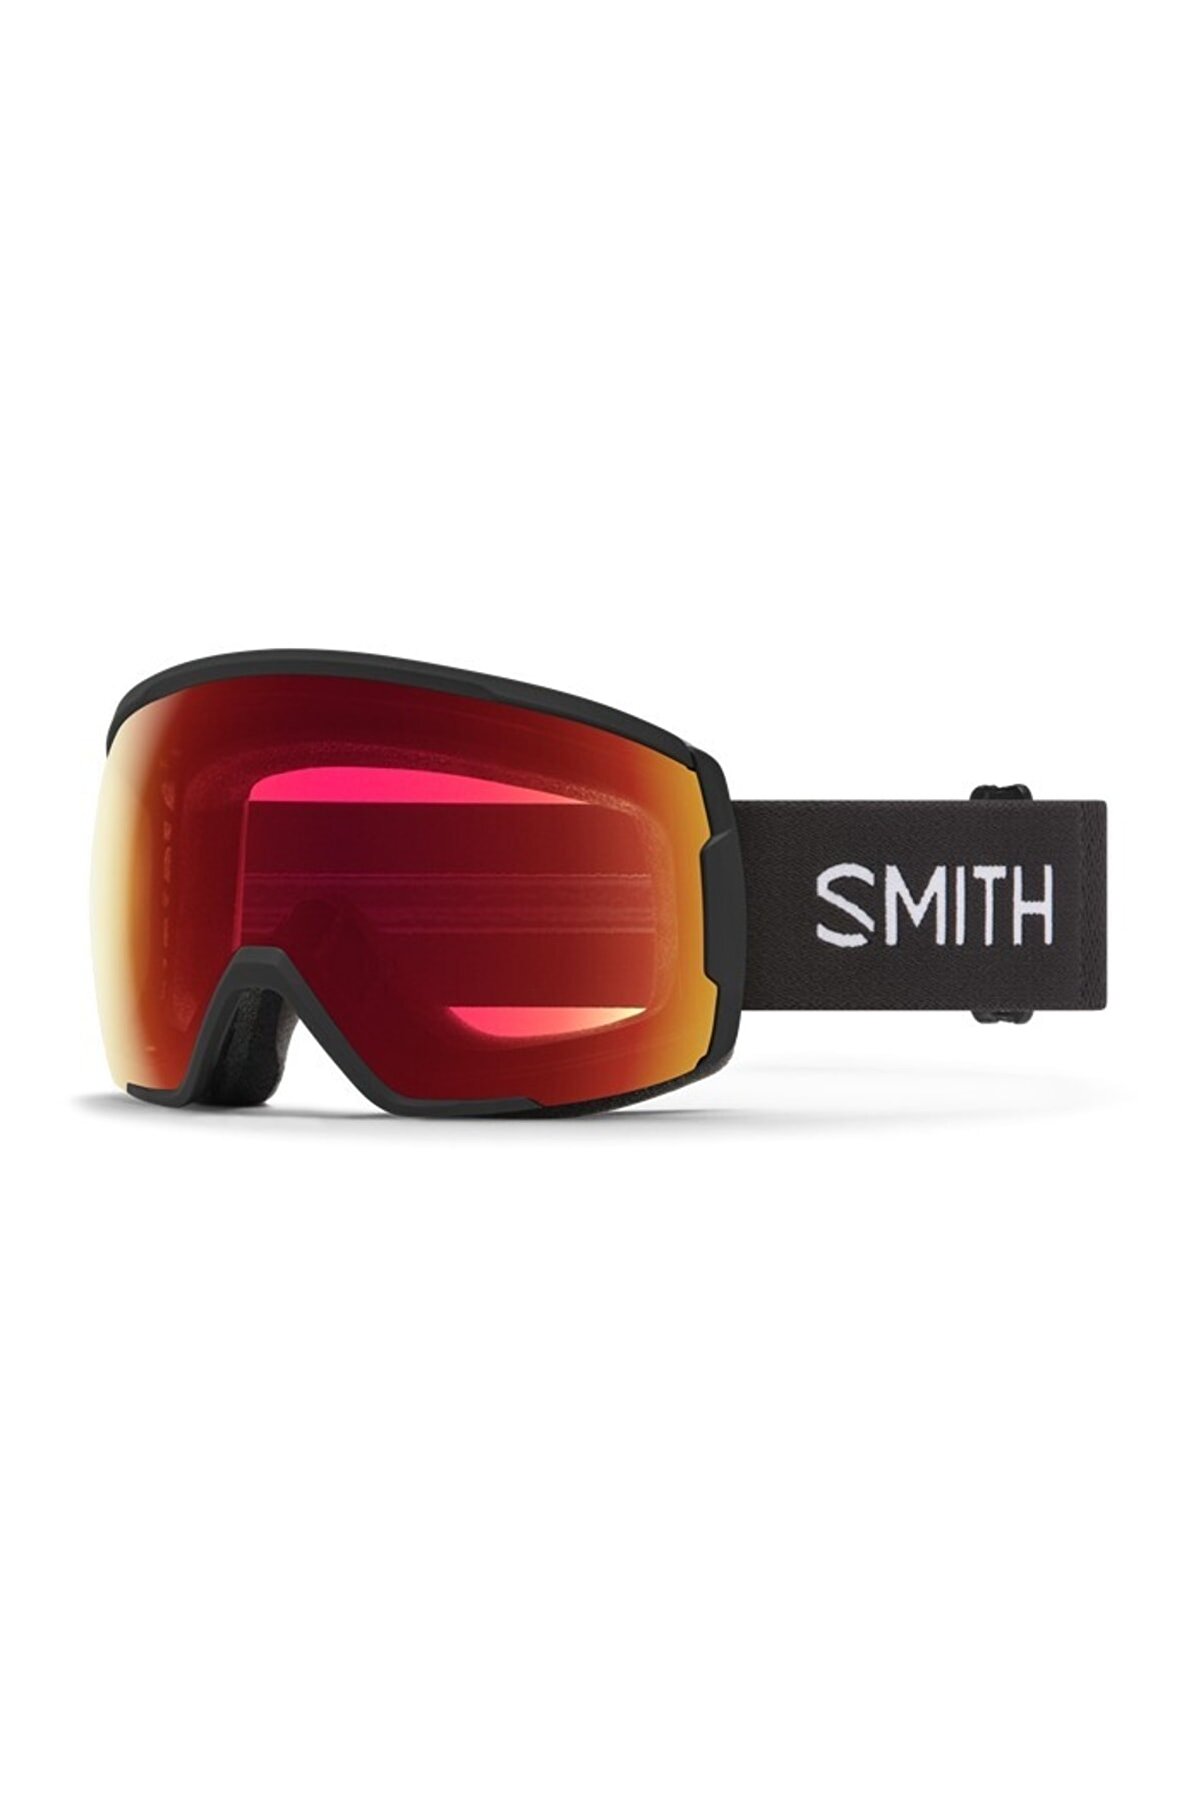 Smith Optics Smith Proxy Gözlüğü